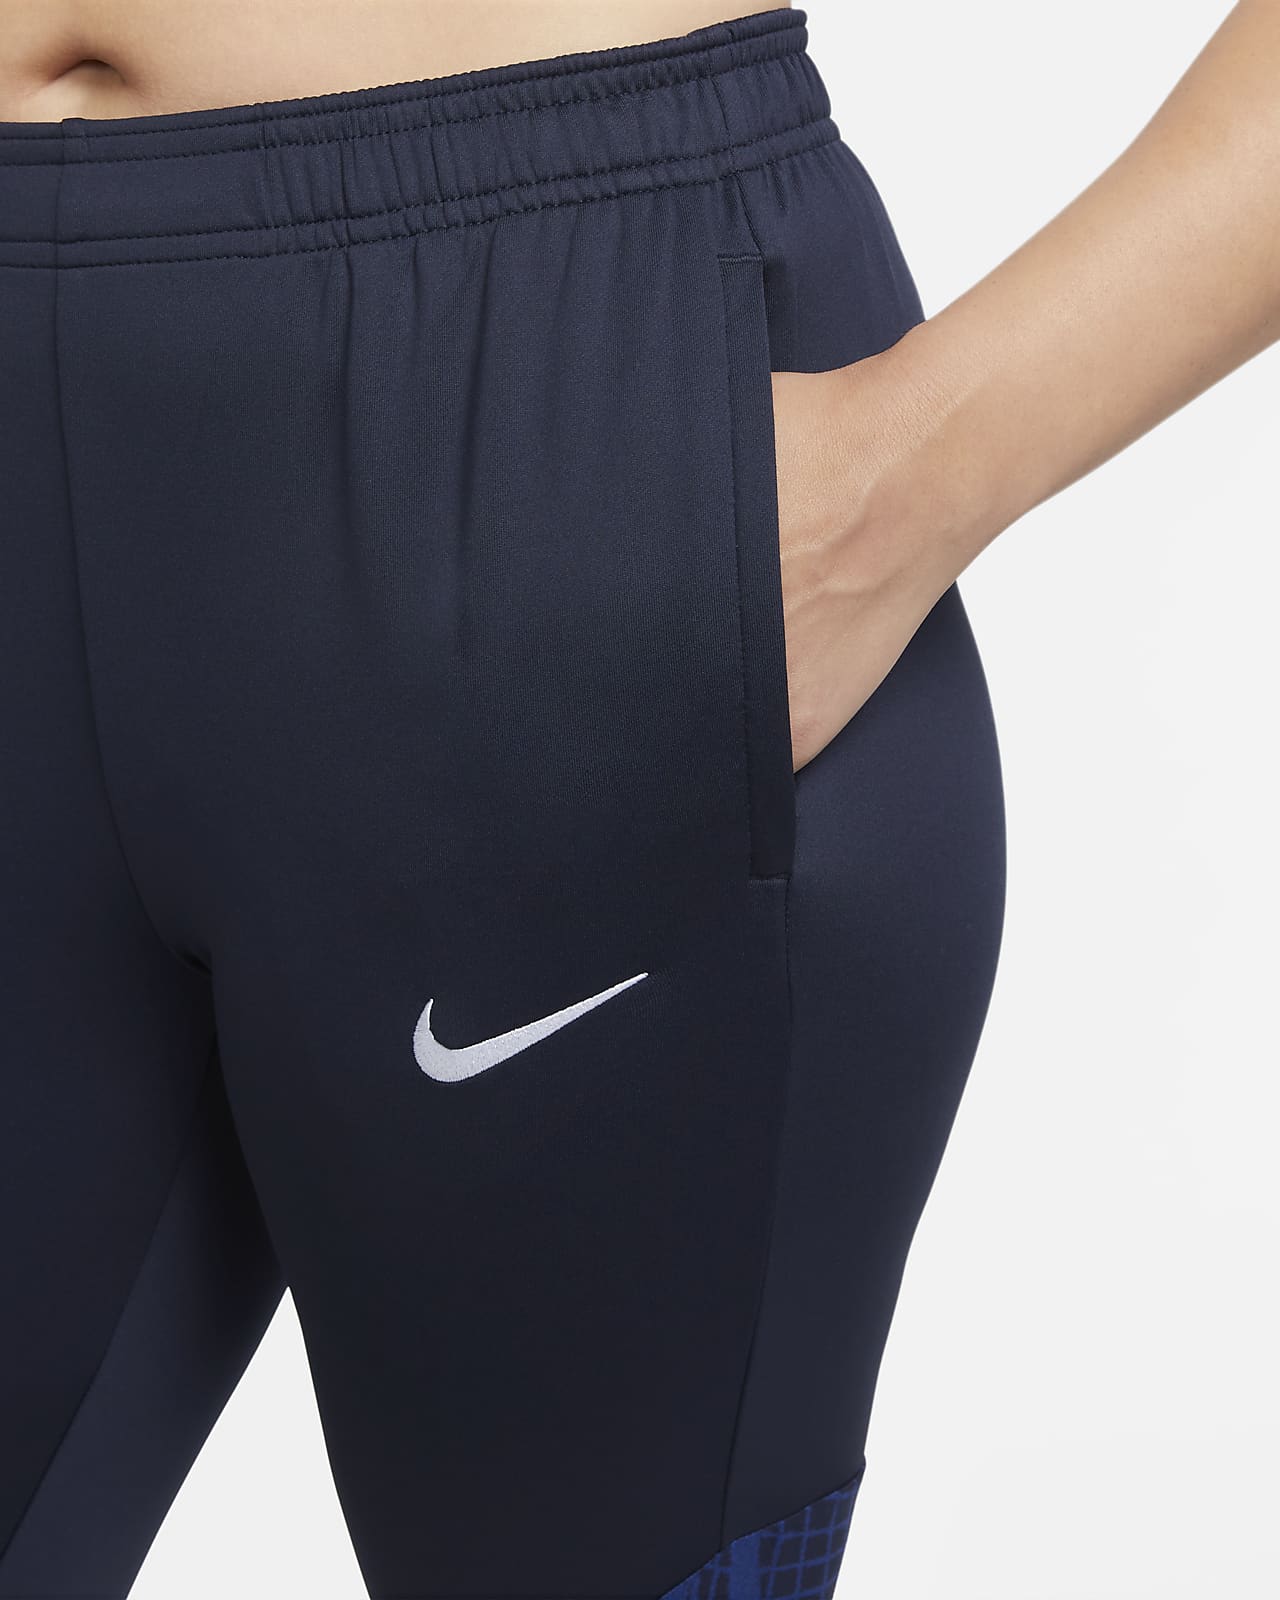 Nike Dri-FIT Strike Track Pants Womens